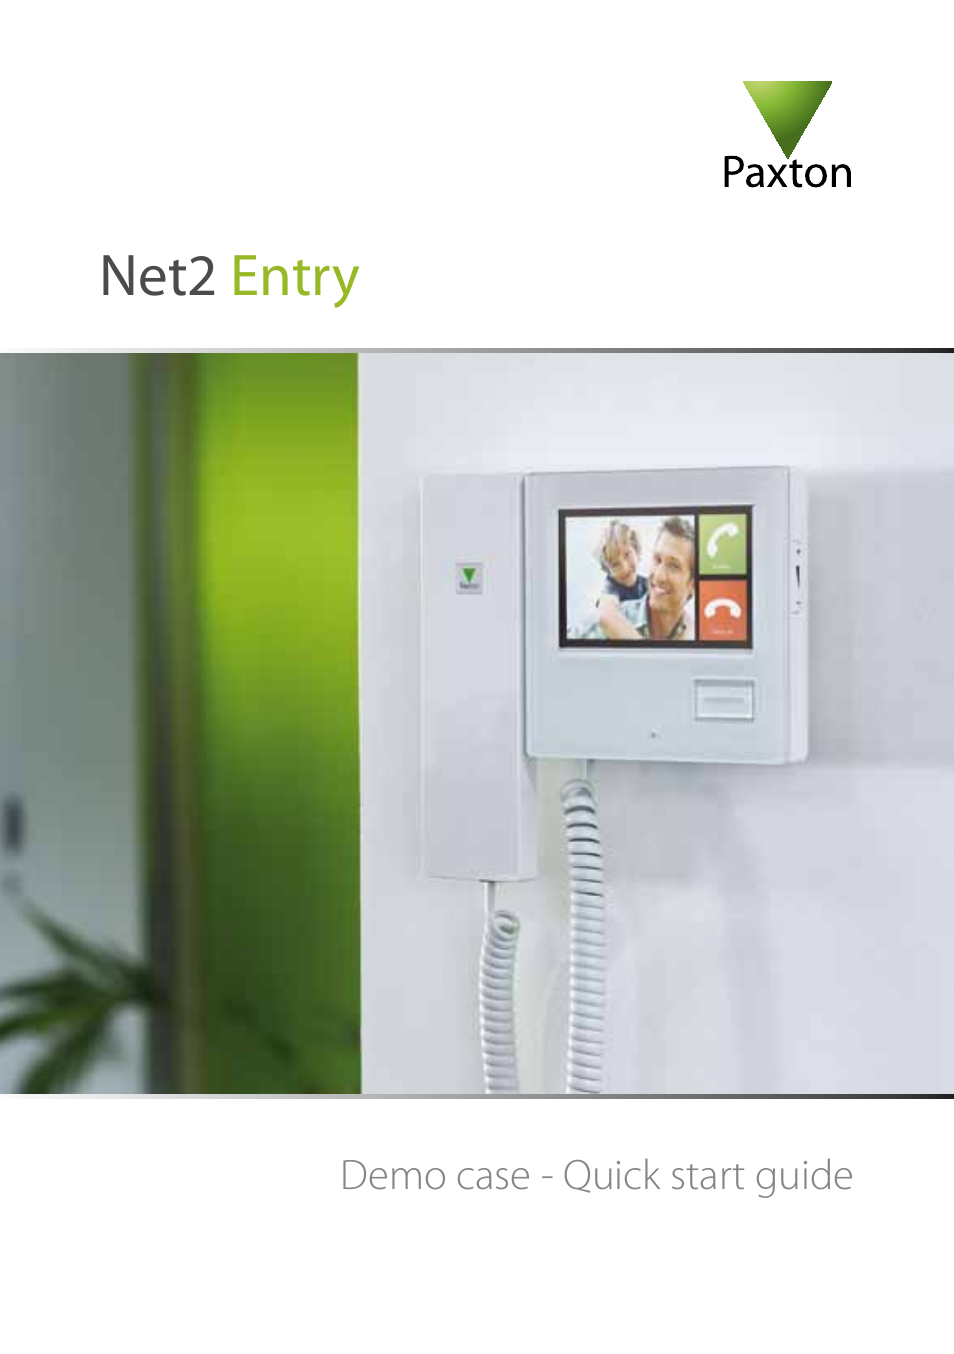 Net2 Entry